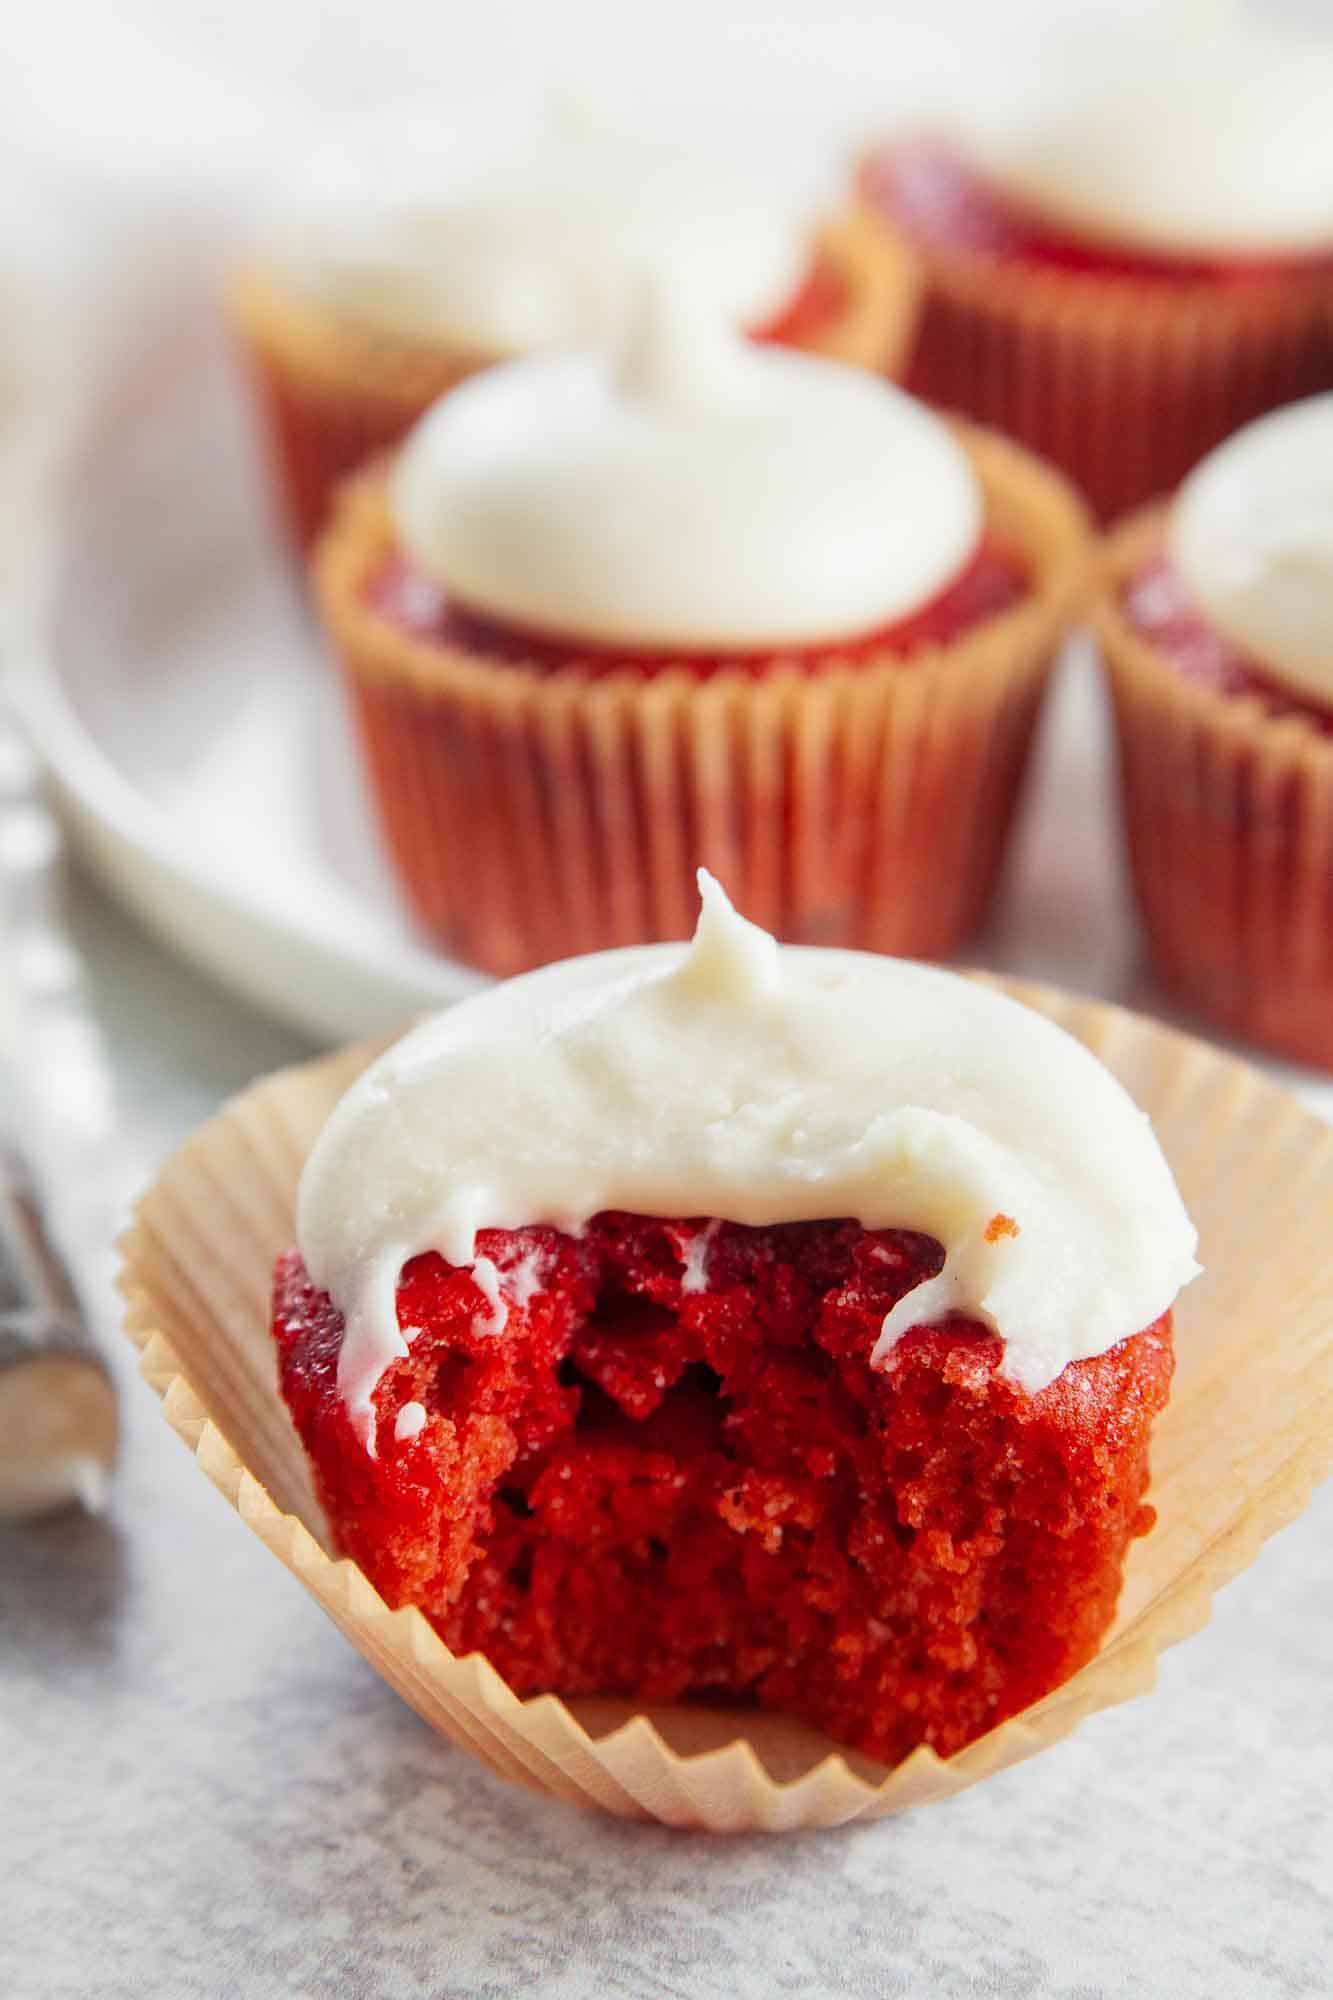 A Red Velvet Cupcake from the inside